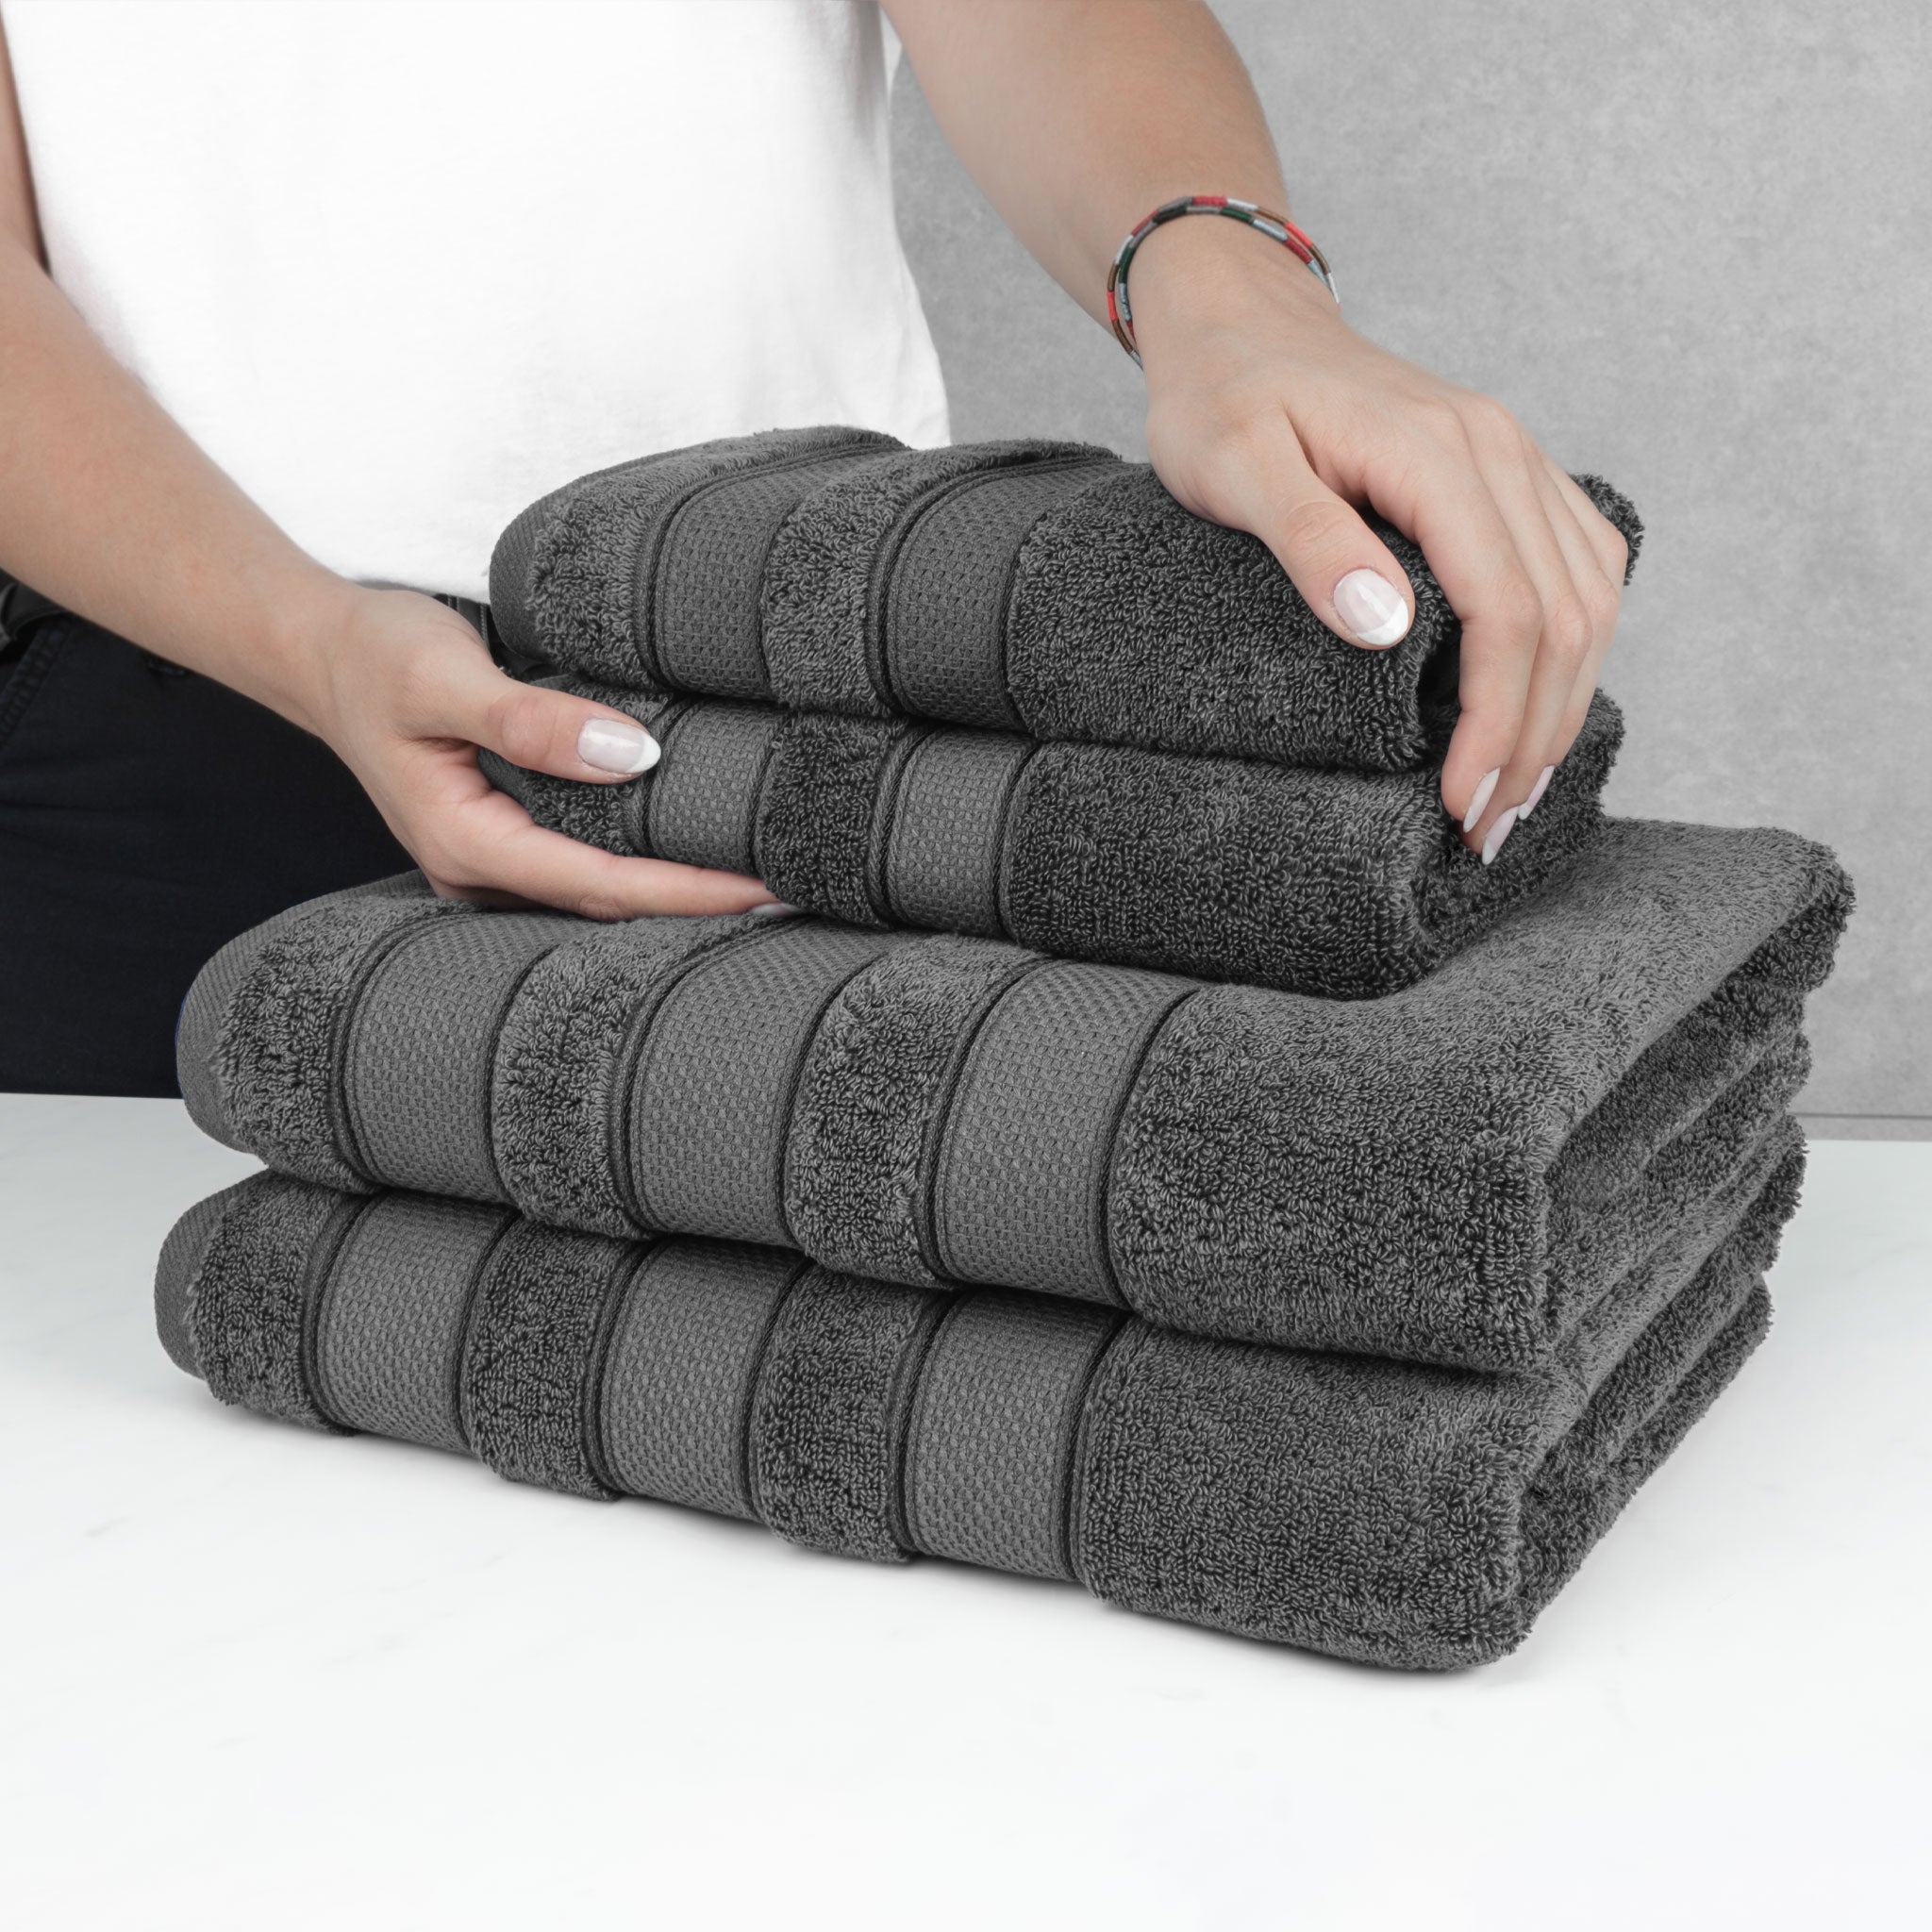 American Soft Linen Bath Towels 100% Turkish Cotton 4 Piece Luxury